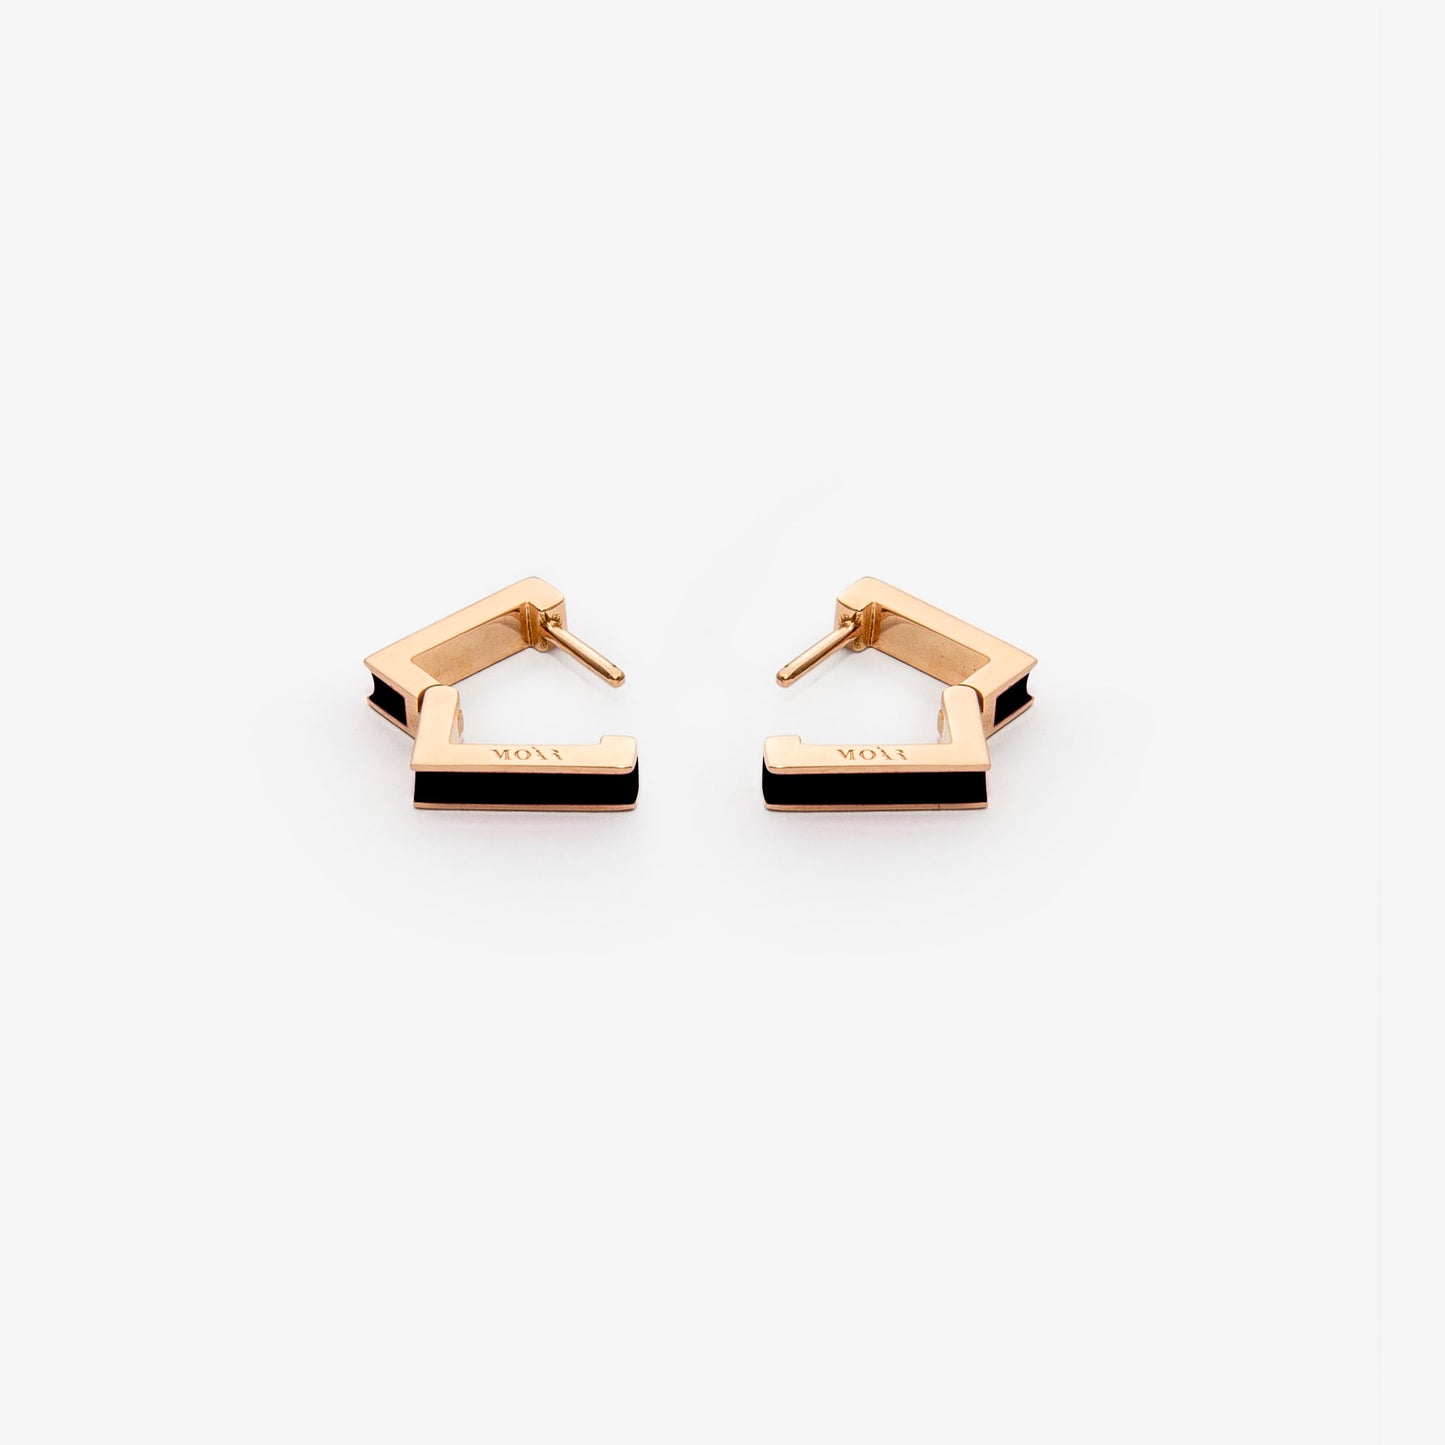 Square black earrings